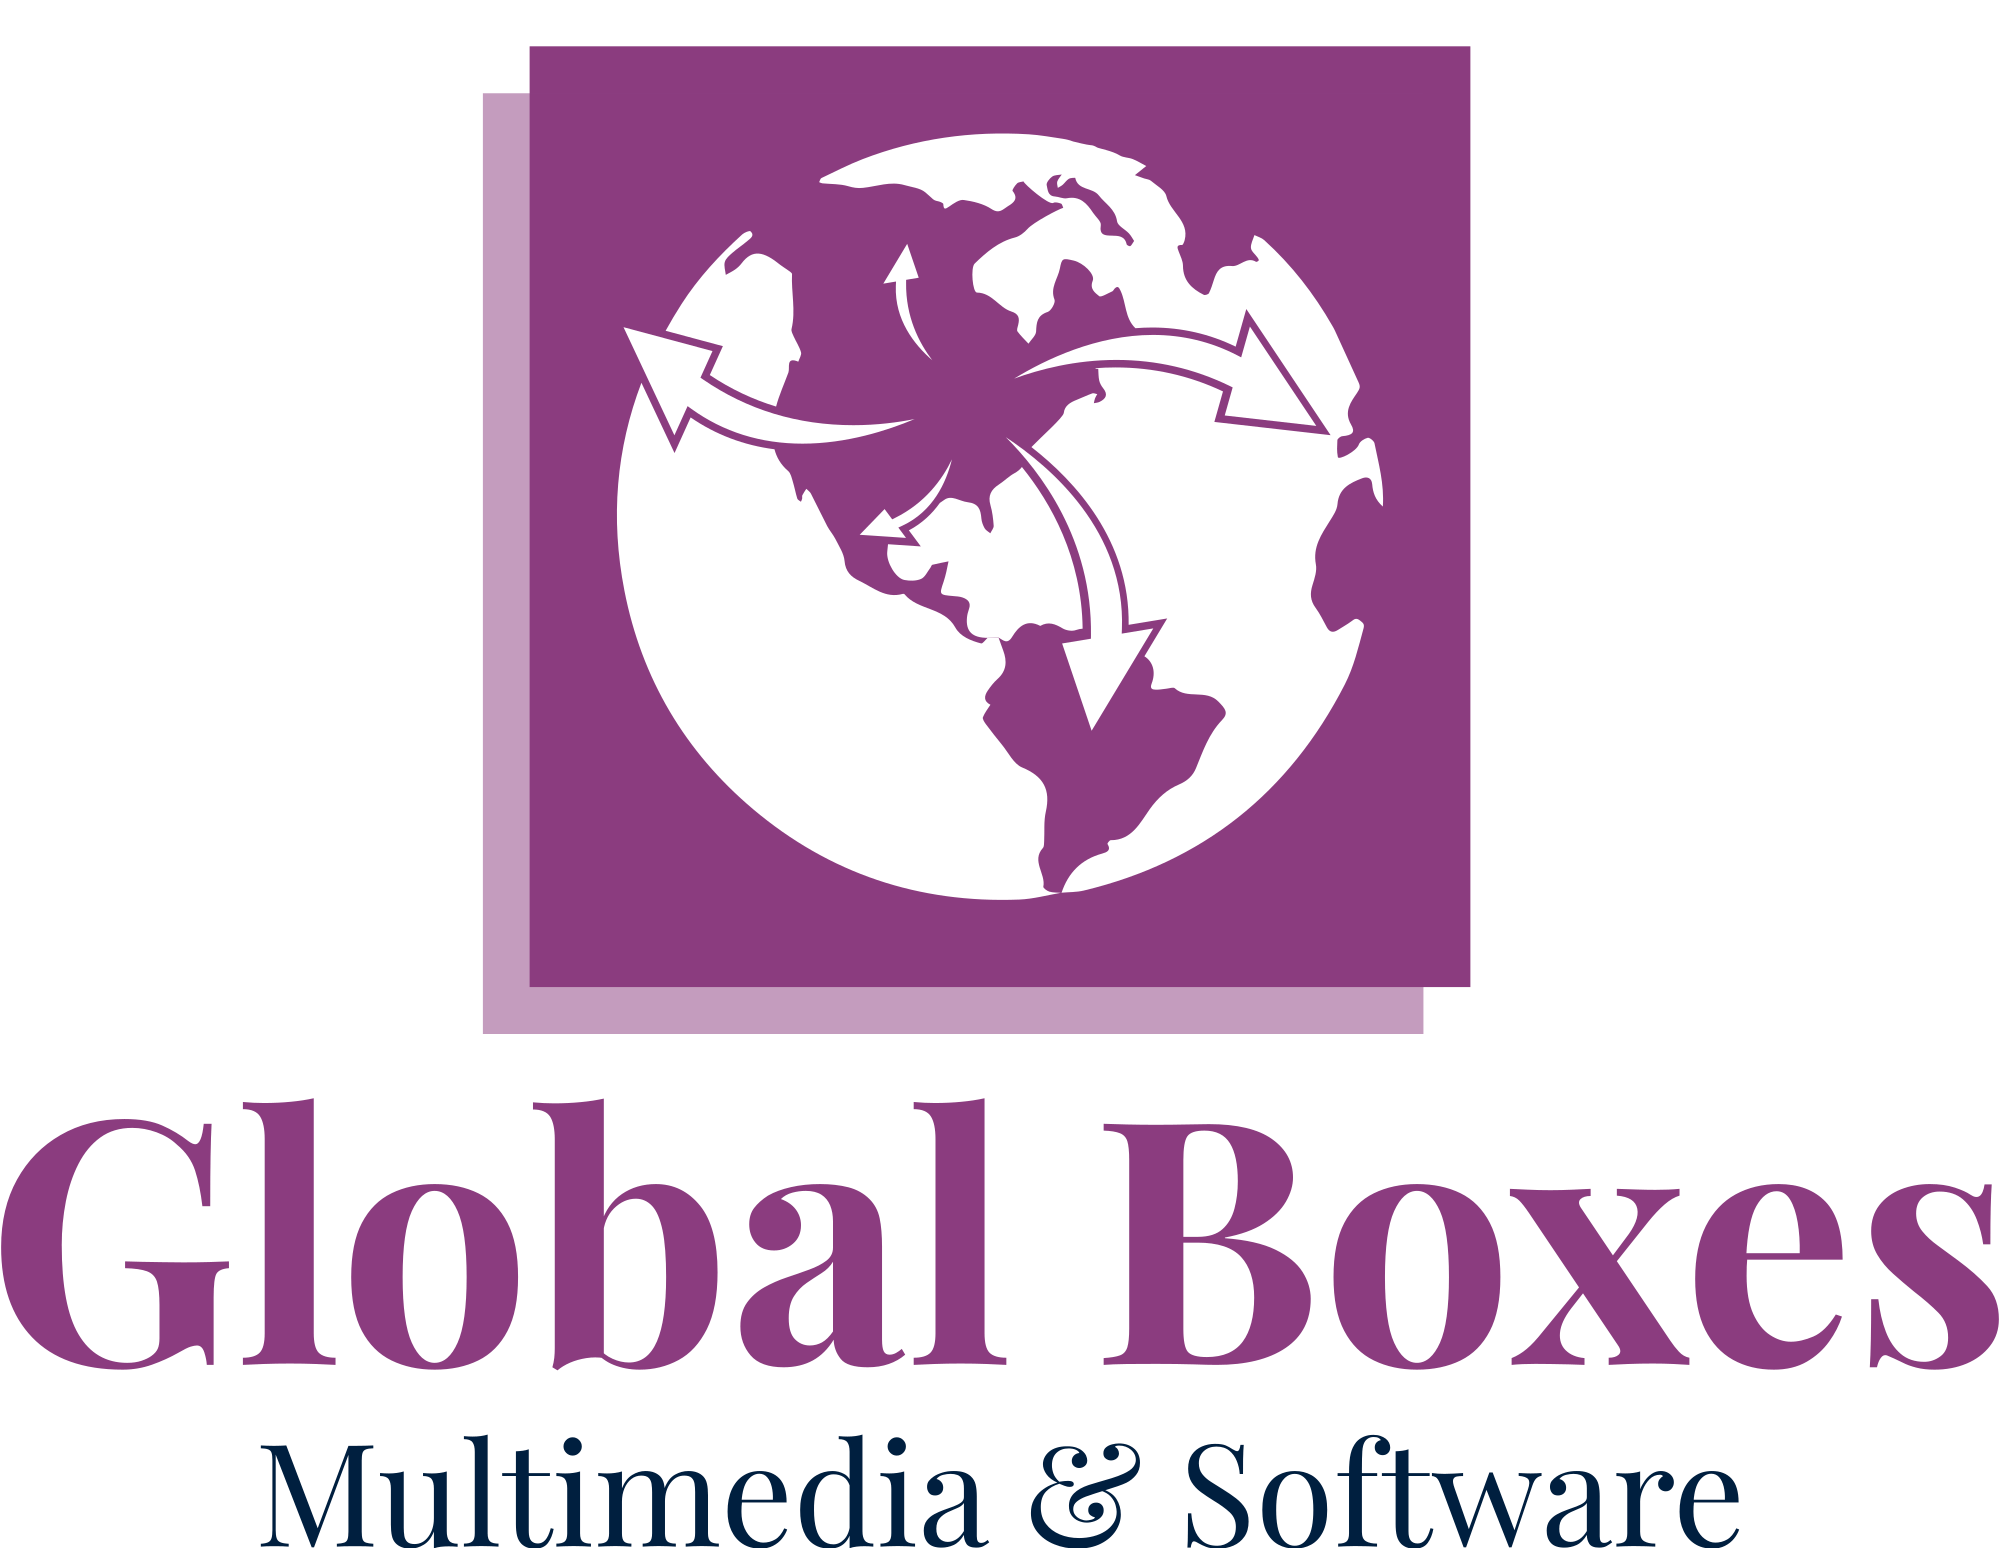 Global Box Company